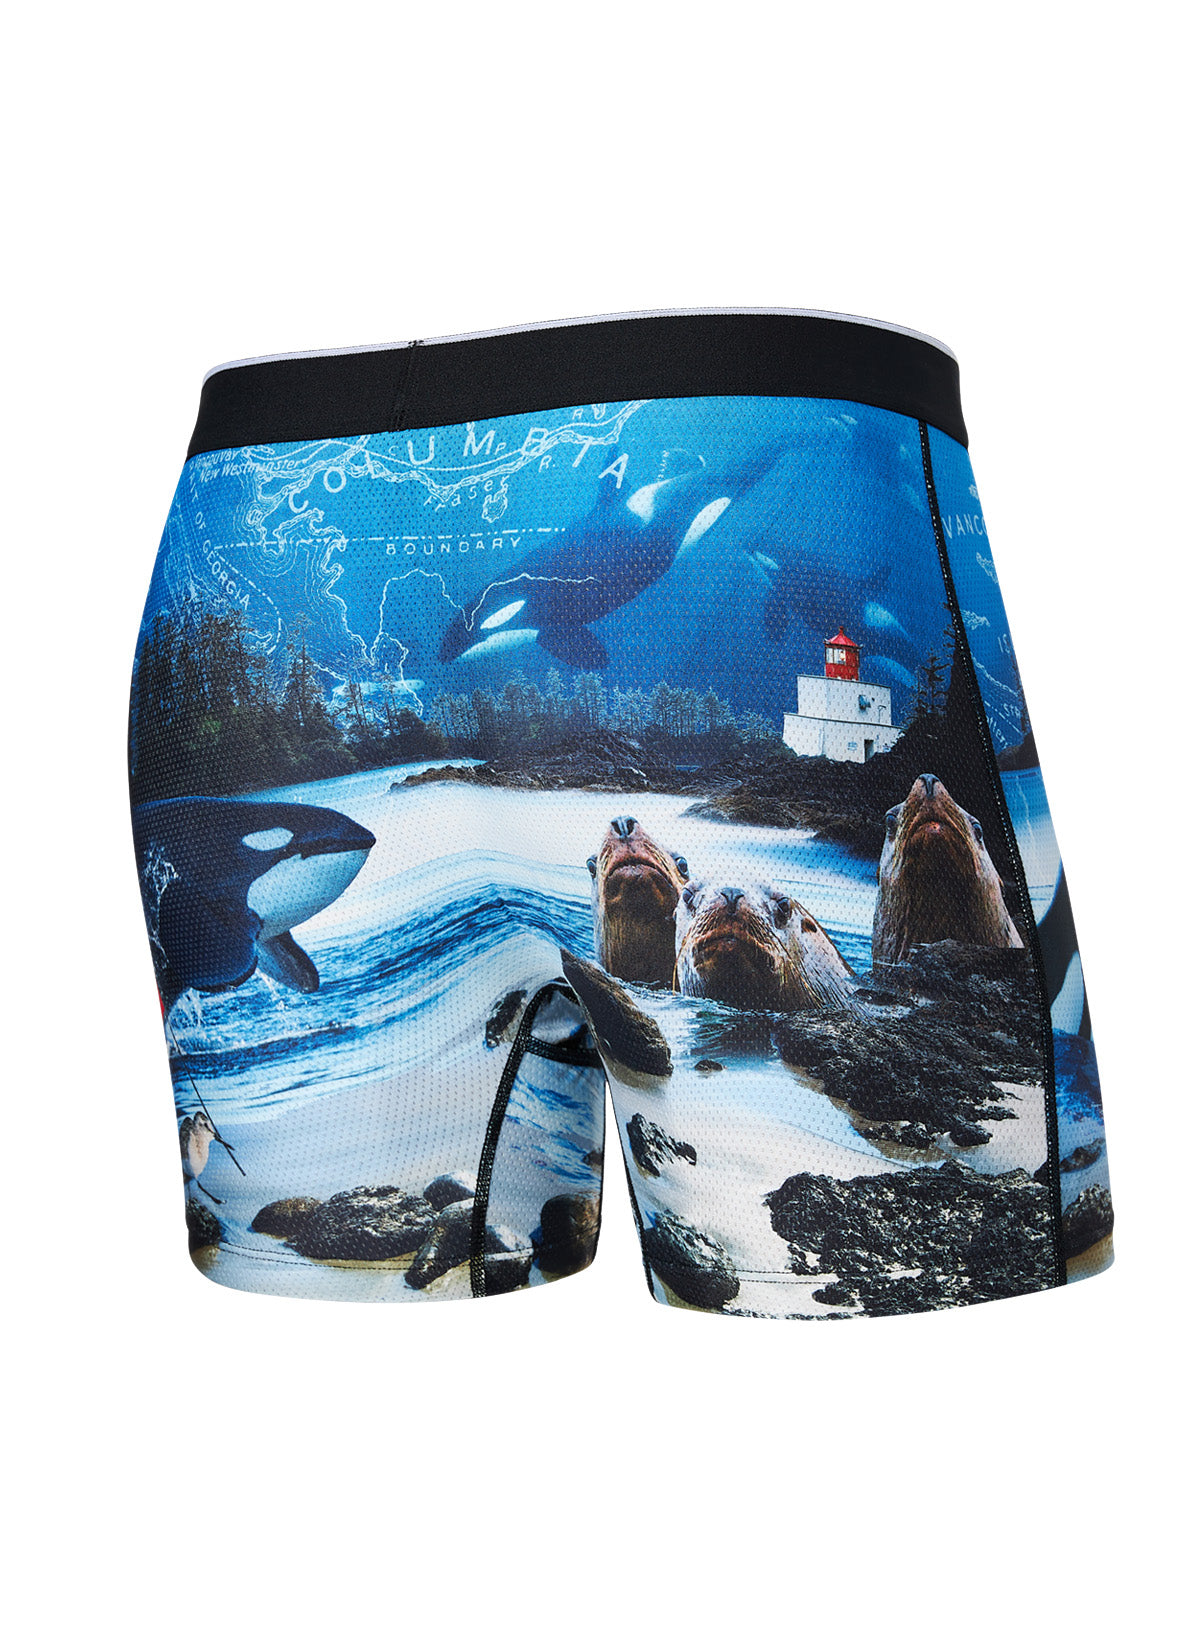 Boxers model 146261 Alpha Male Boxers Shorts, Slips, Swimming Briefs for  Men Wholesale Clothing Matterhorn